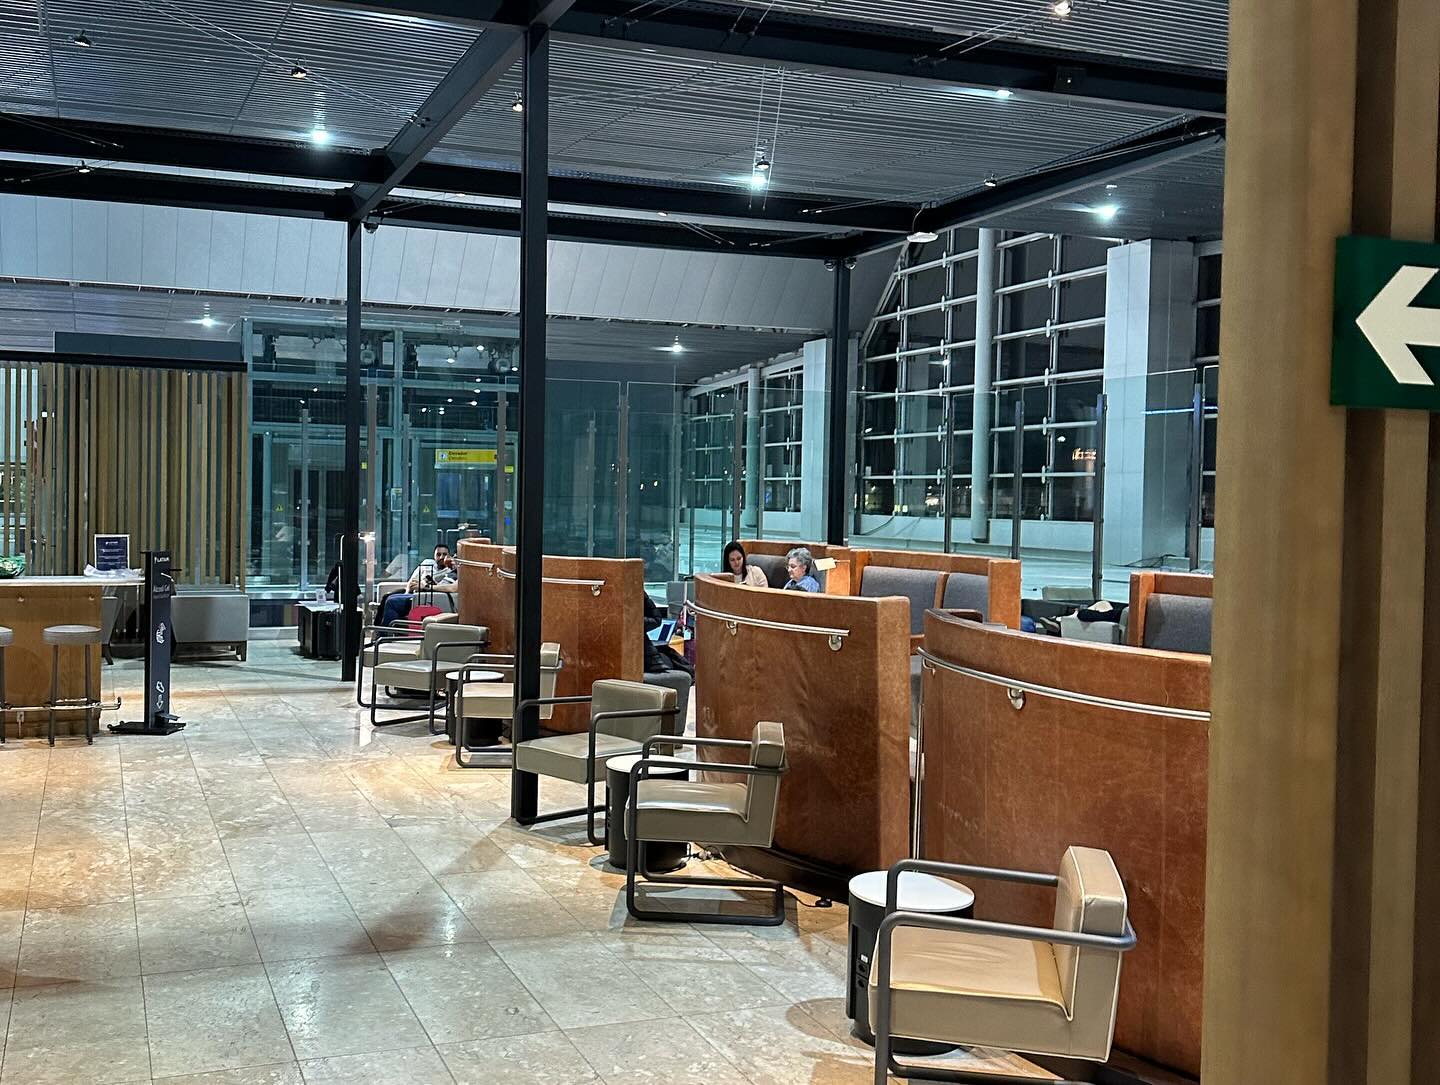 LATAM VIP lounge at Guarulhos airport